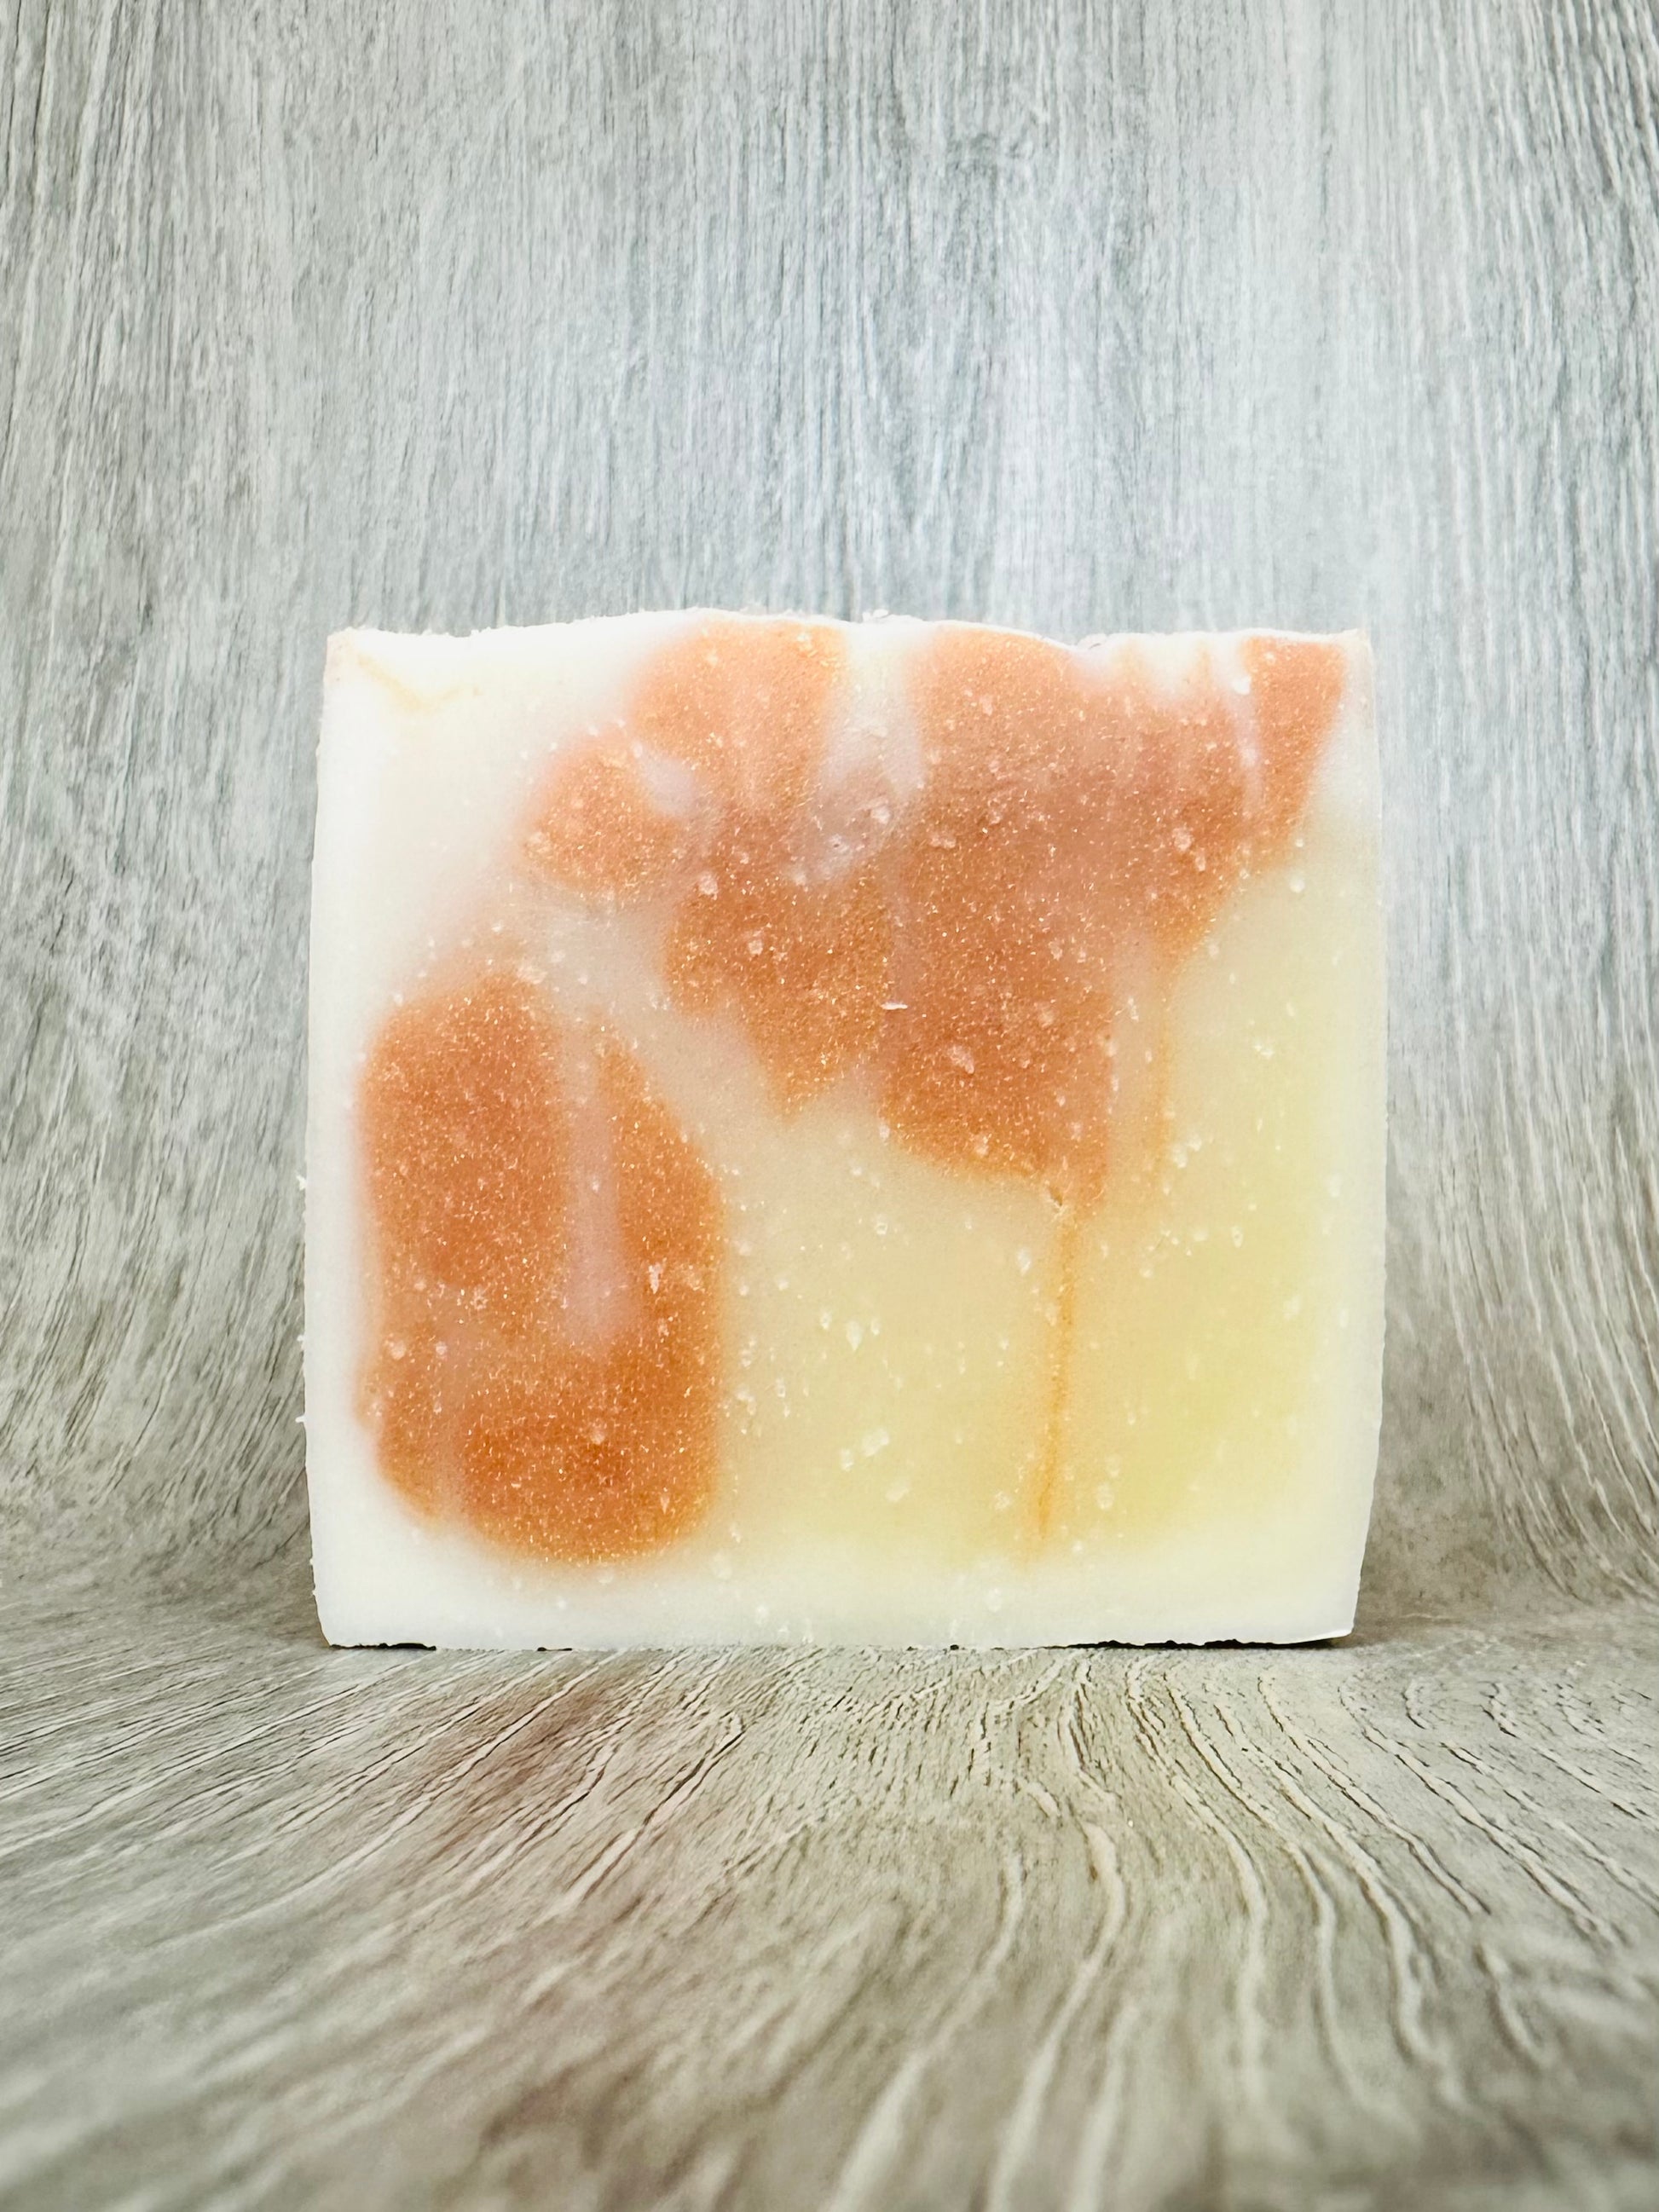 Coco Beach soap/savon